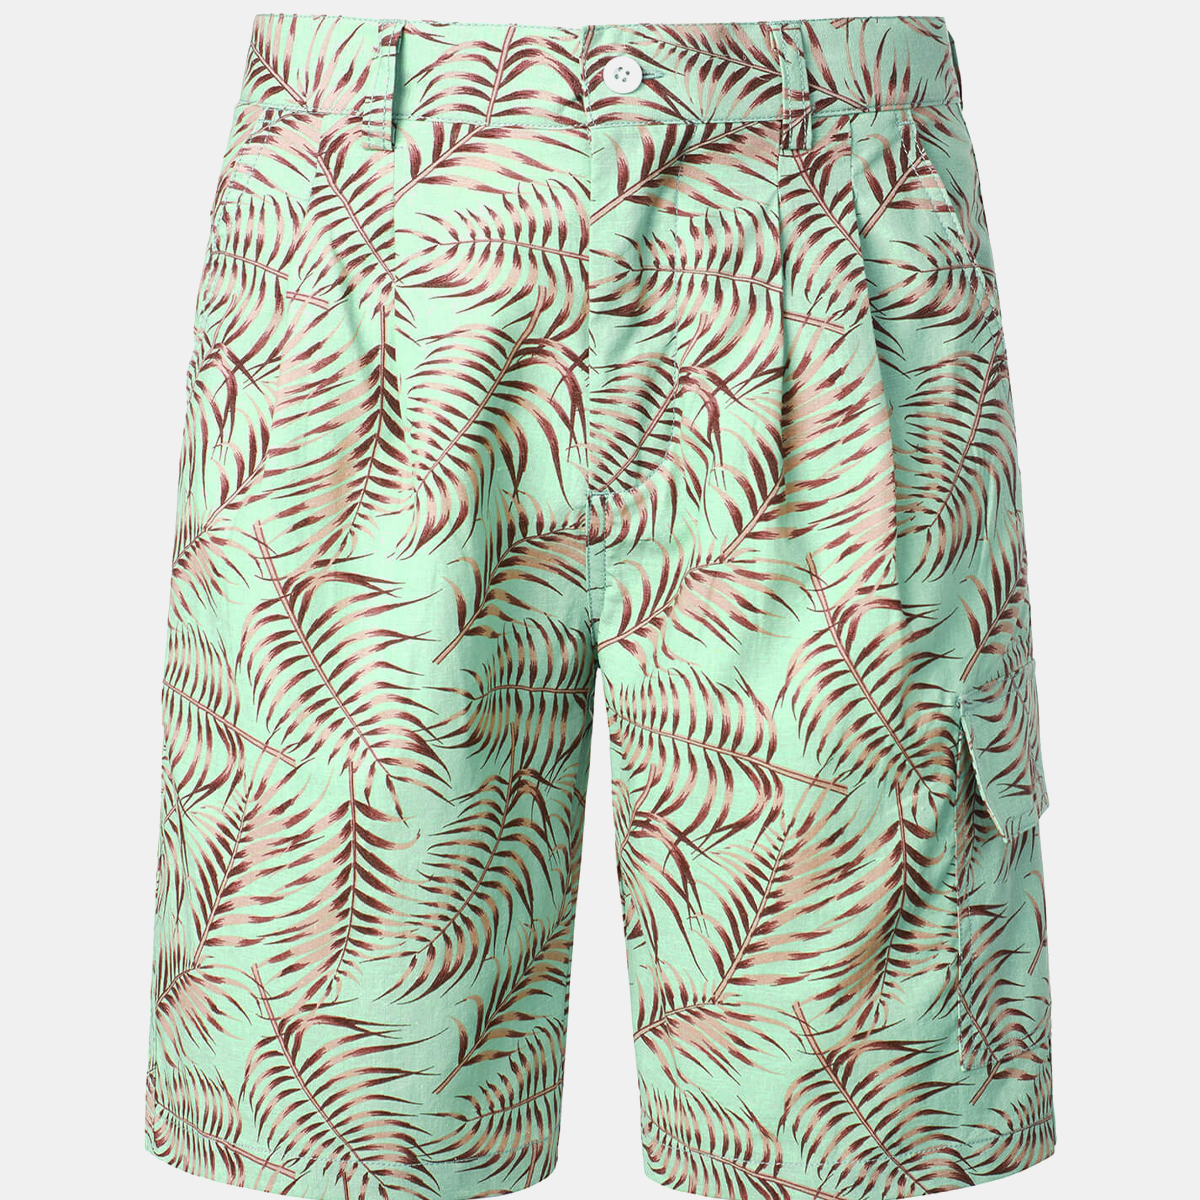 Men's Casual Graphic Print Cotton Linen Summer Beach Shorts